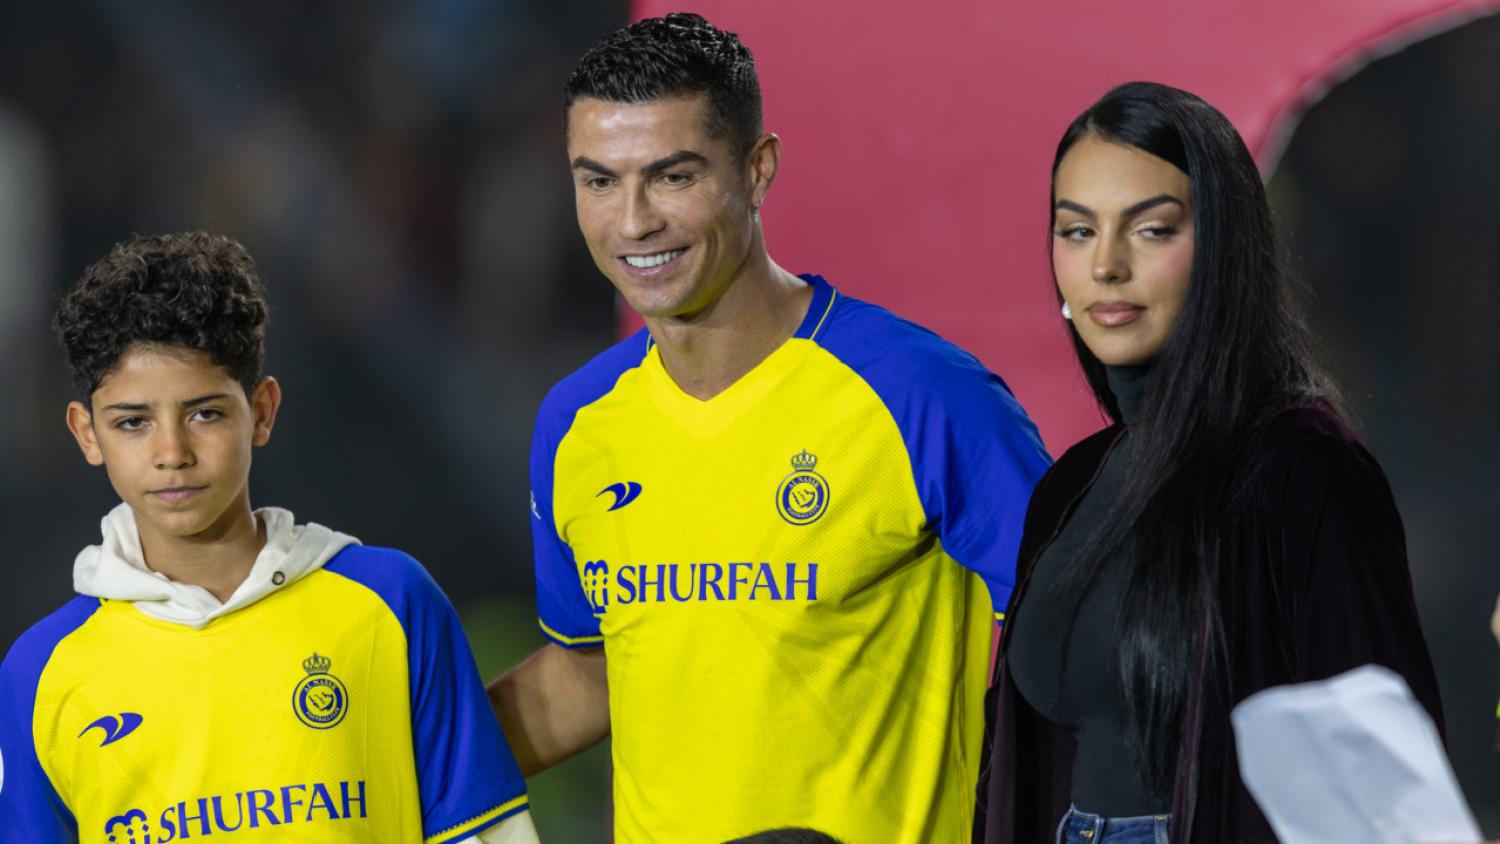 Cristiano Ronaldo Al Nassr presentation makes it official